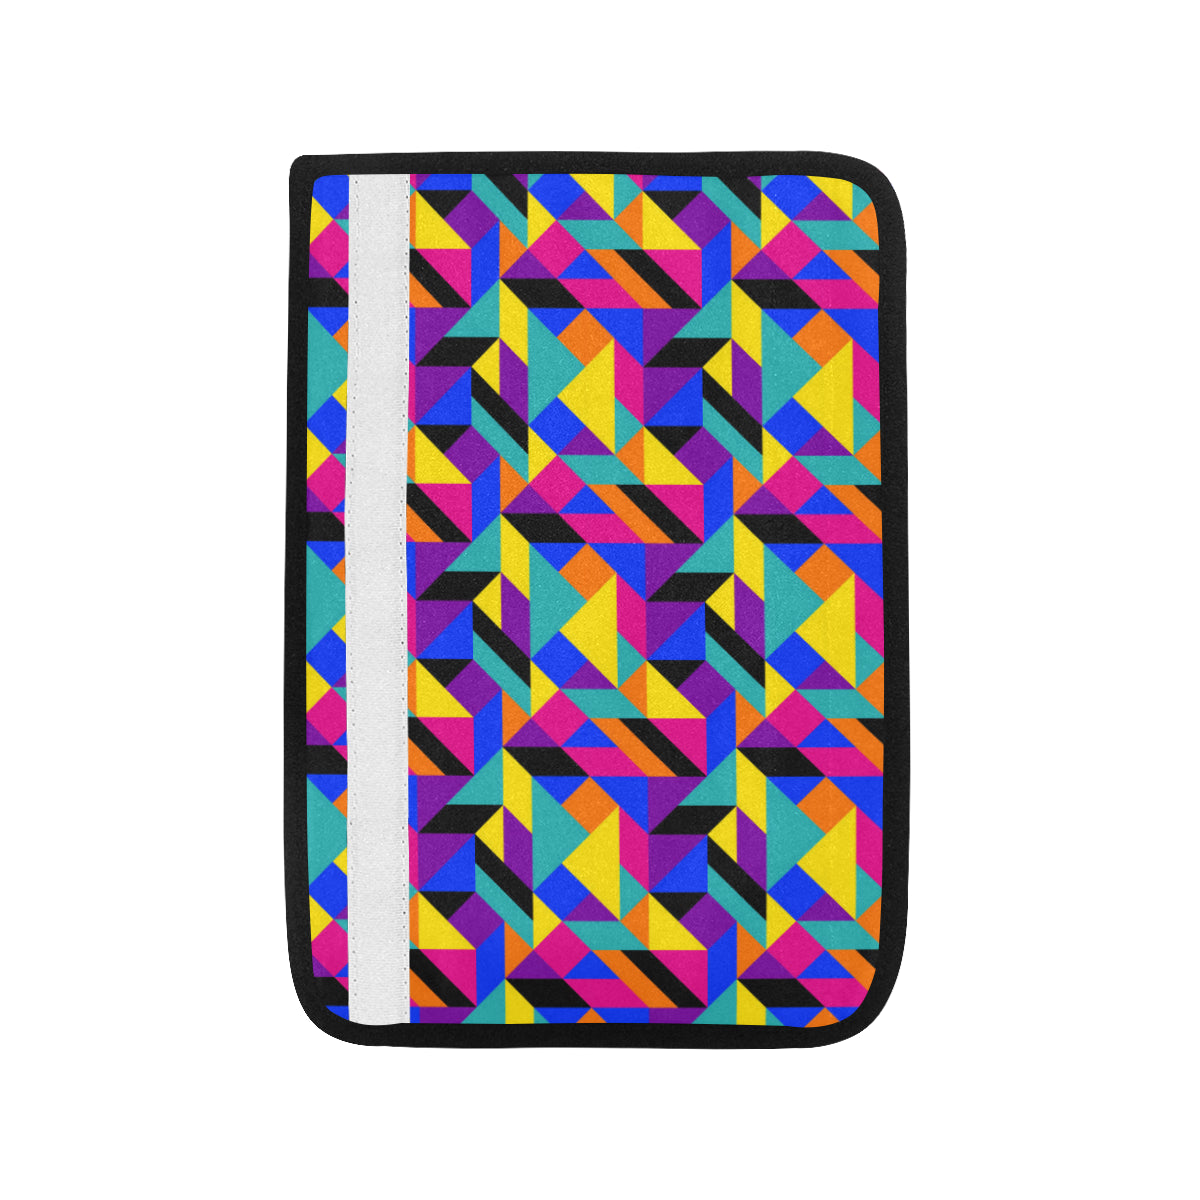 90s Colorful Pattern Print Design 1 Car Seat Belt Cover